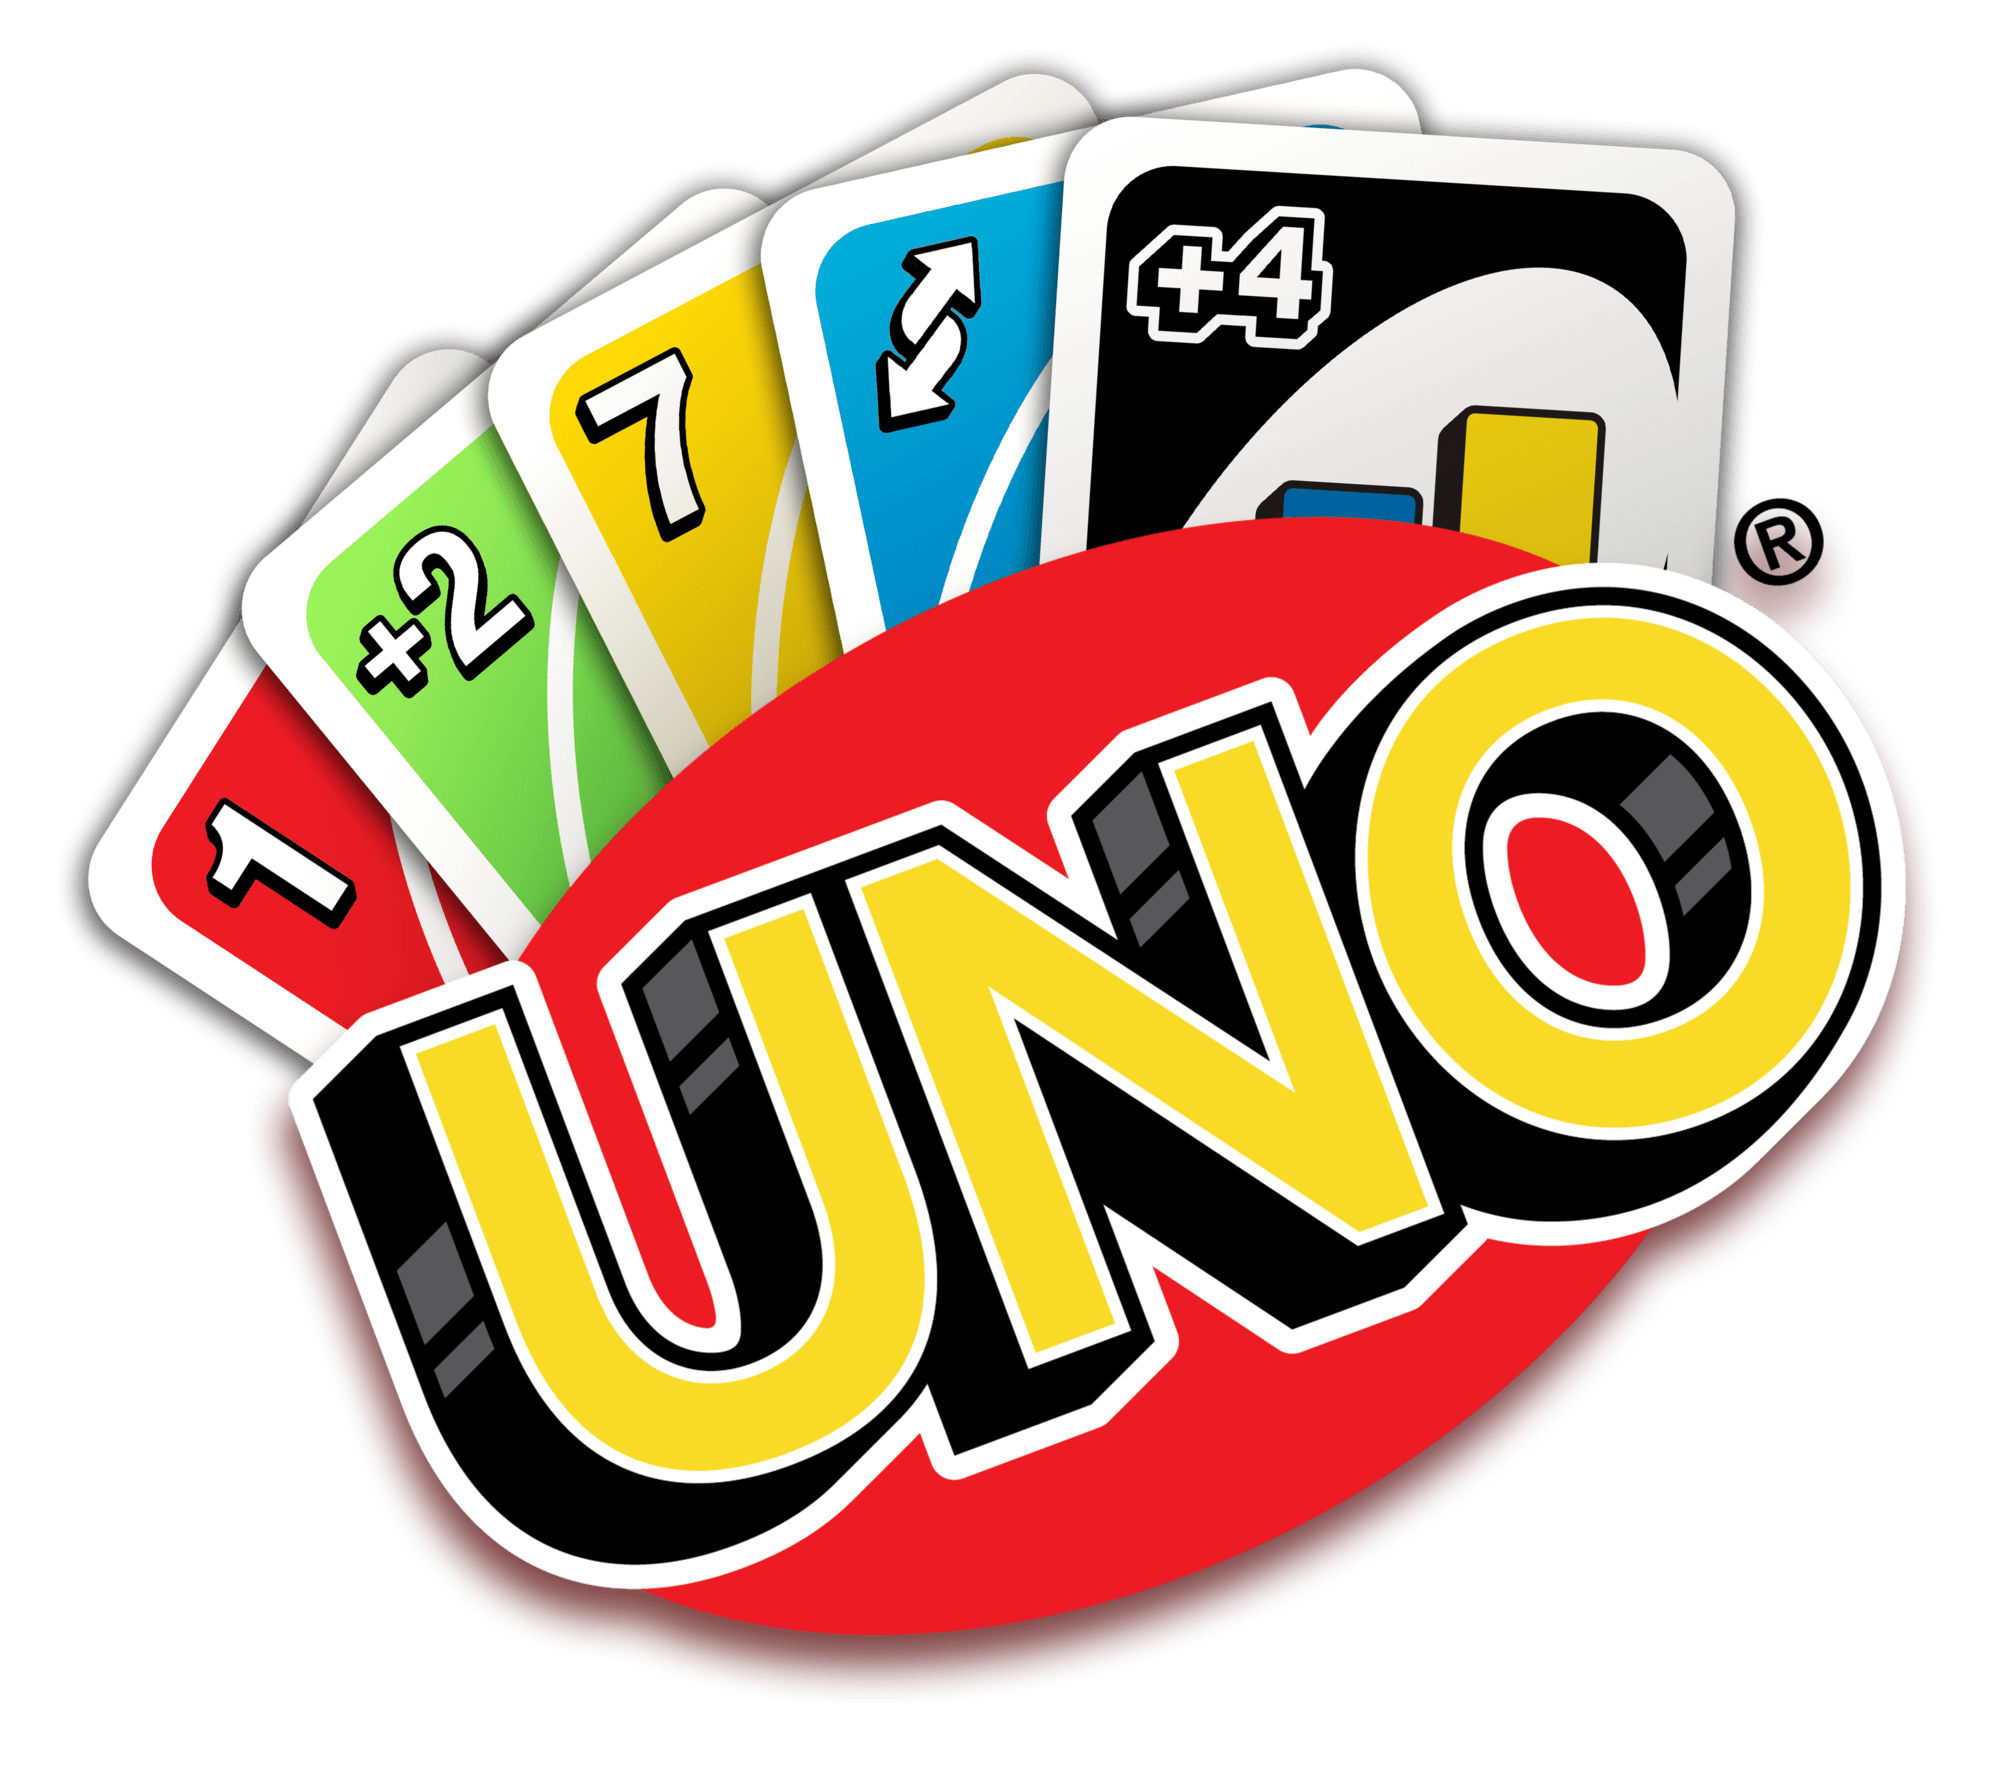 Uno Logo - Uno | Logopedia | FANDOM powered by Wikia